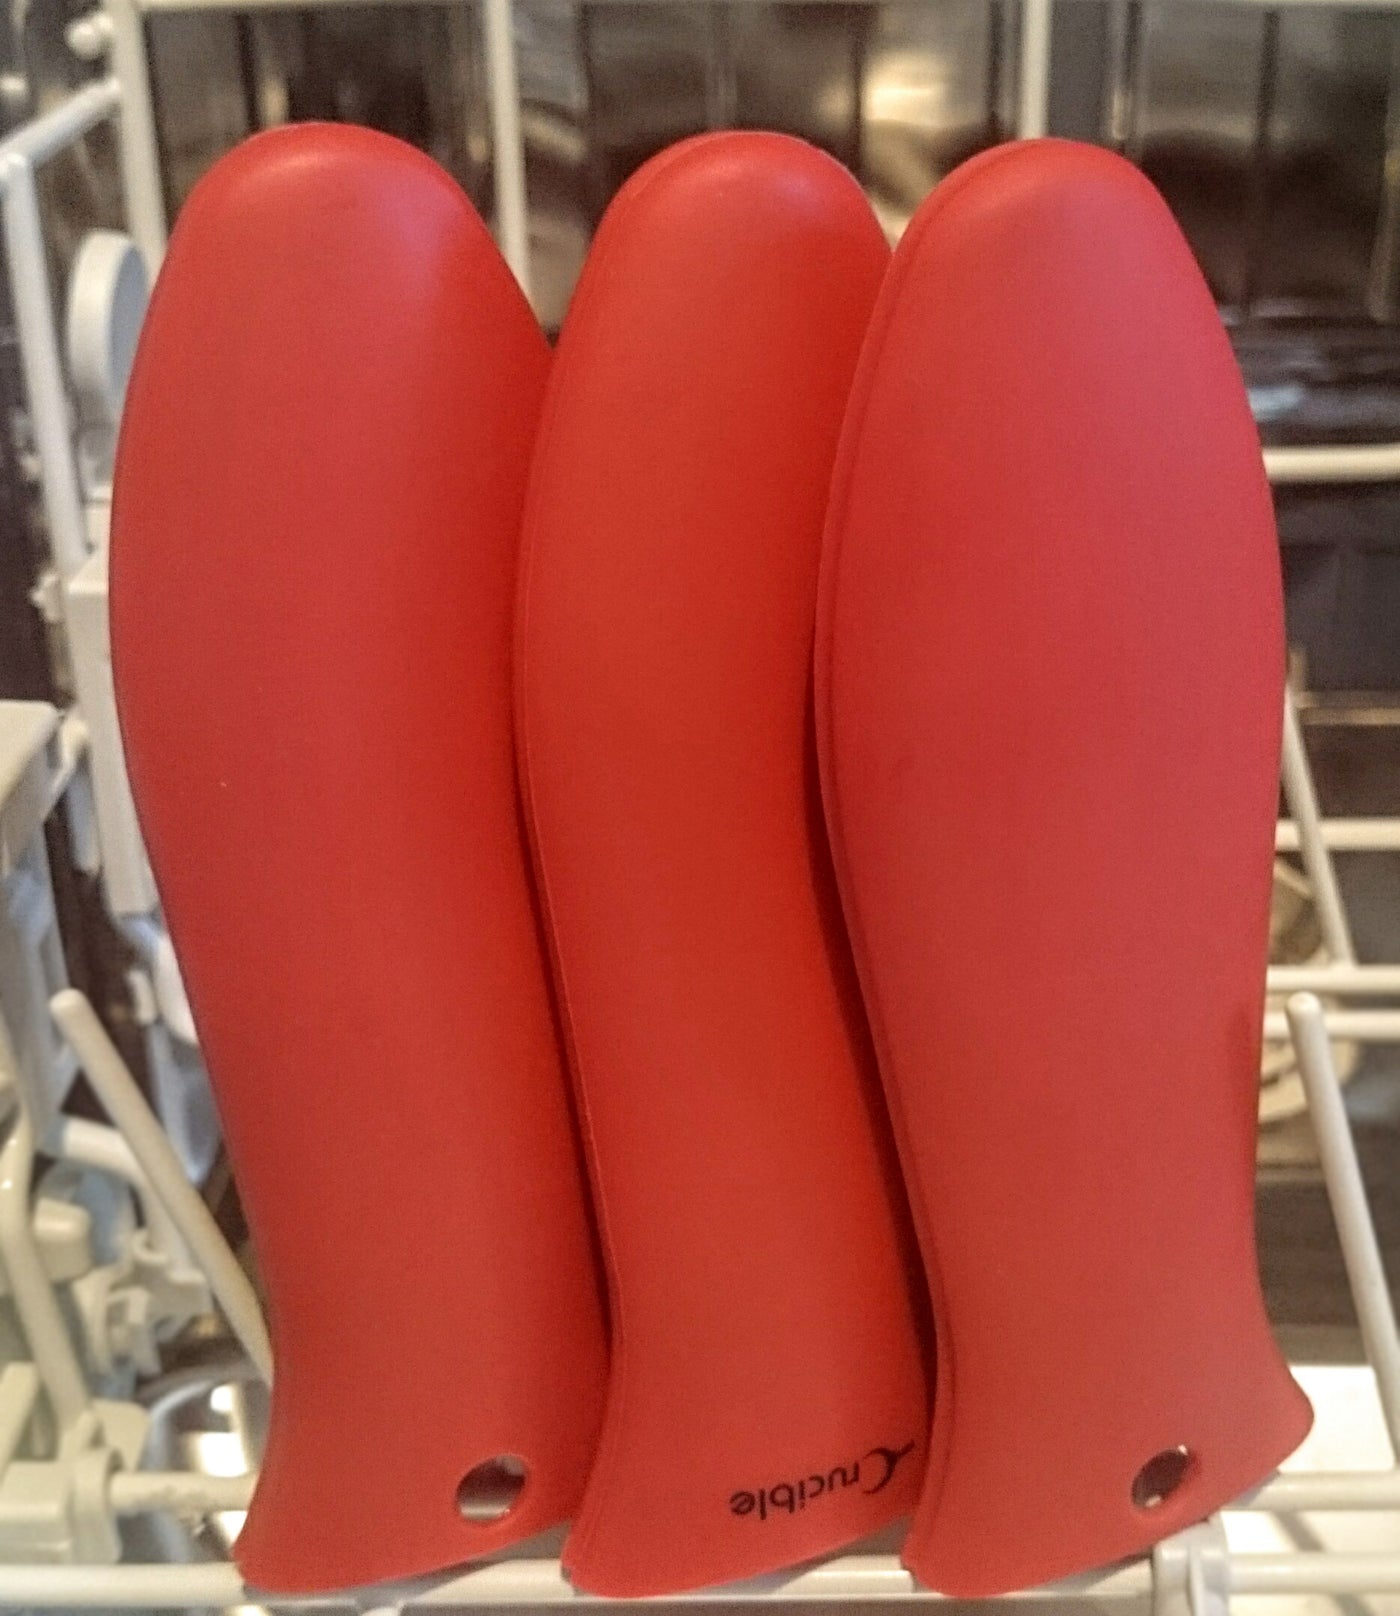 Soporte de mango caliente de silicona, agarradera (paquete de 2 combinados rojo) - Empuñadura de manga, cubierta de mango